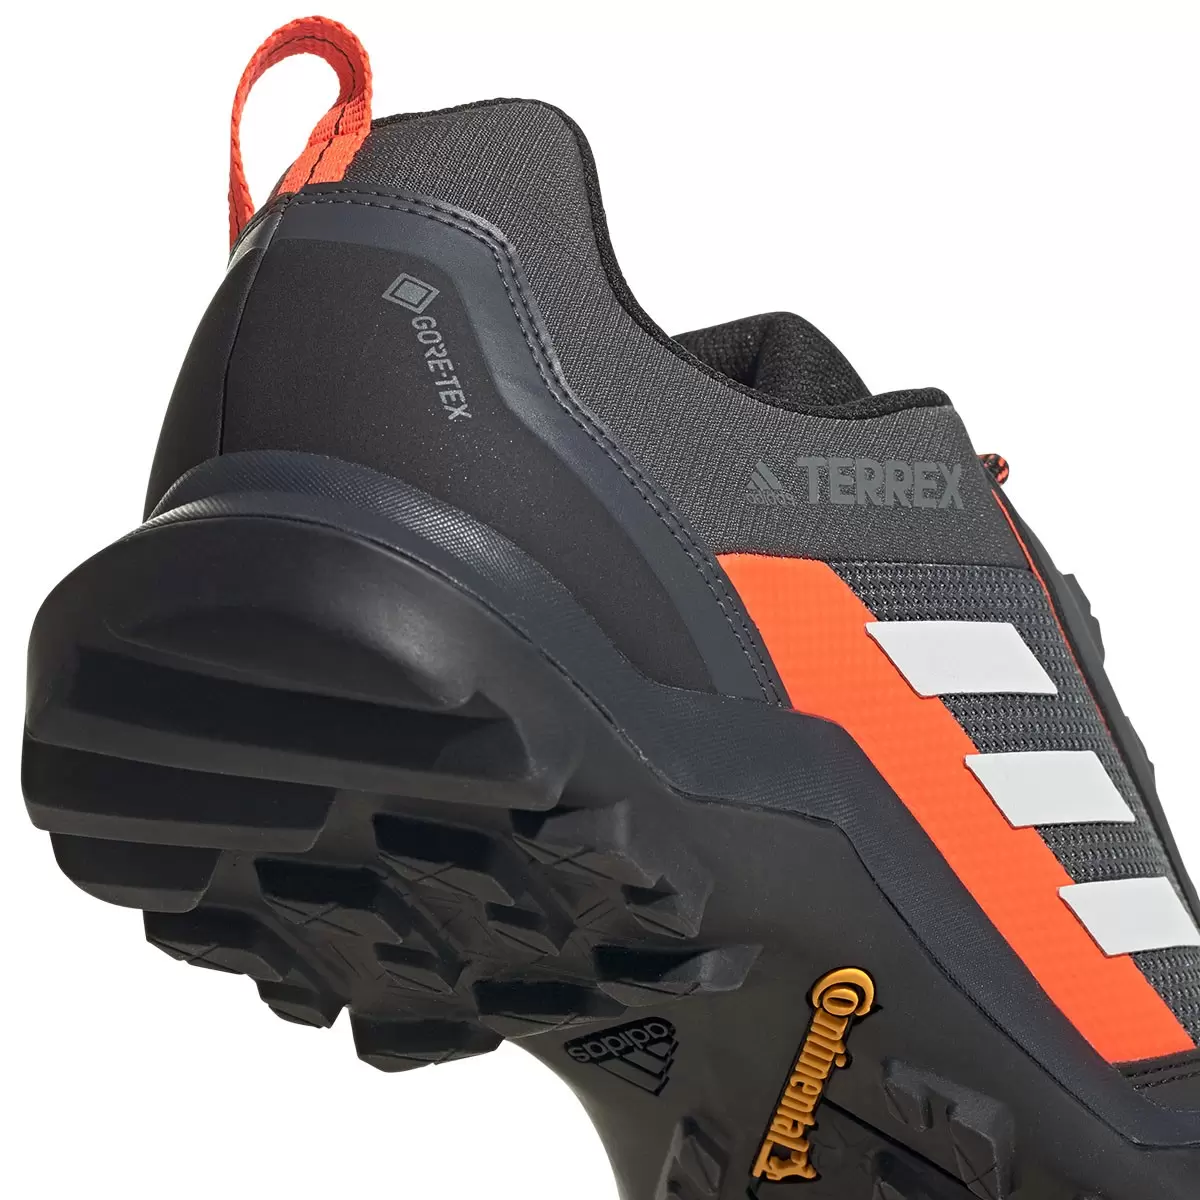 Adidas 男 Terrex 登山鞋 黑